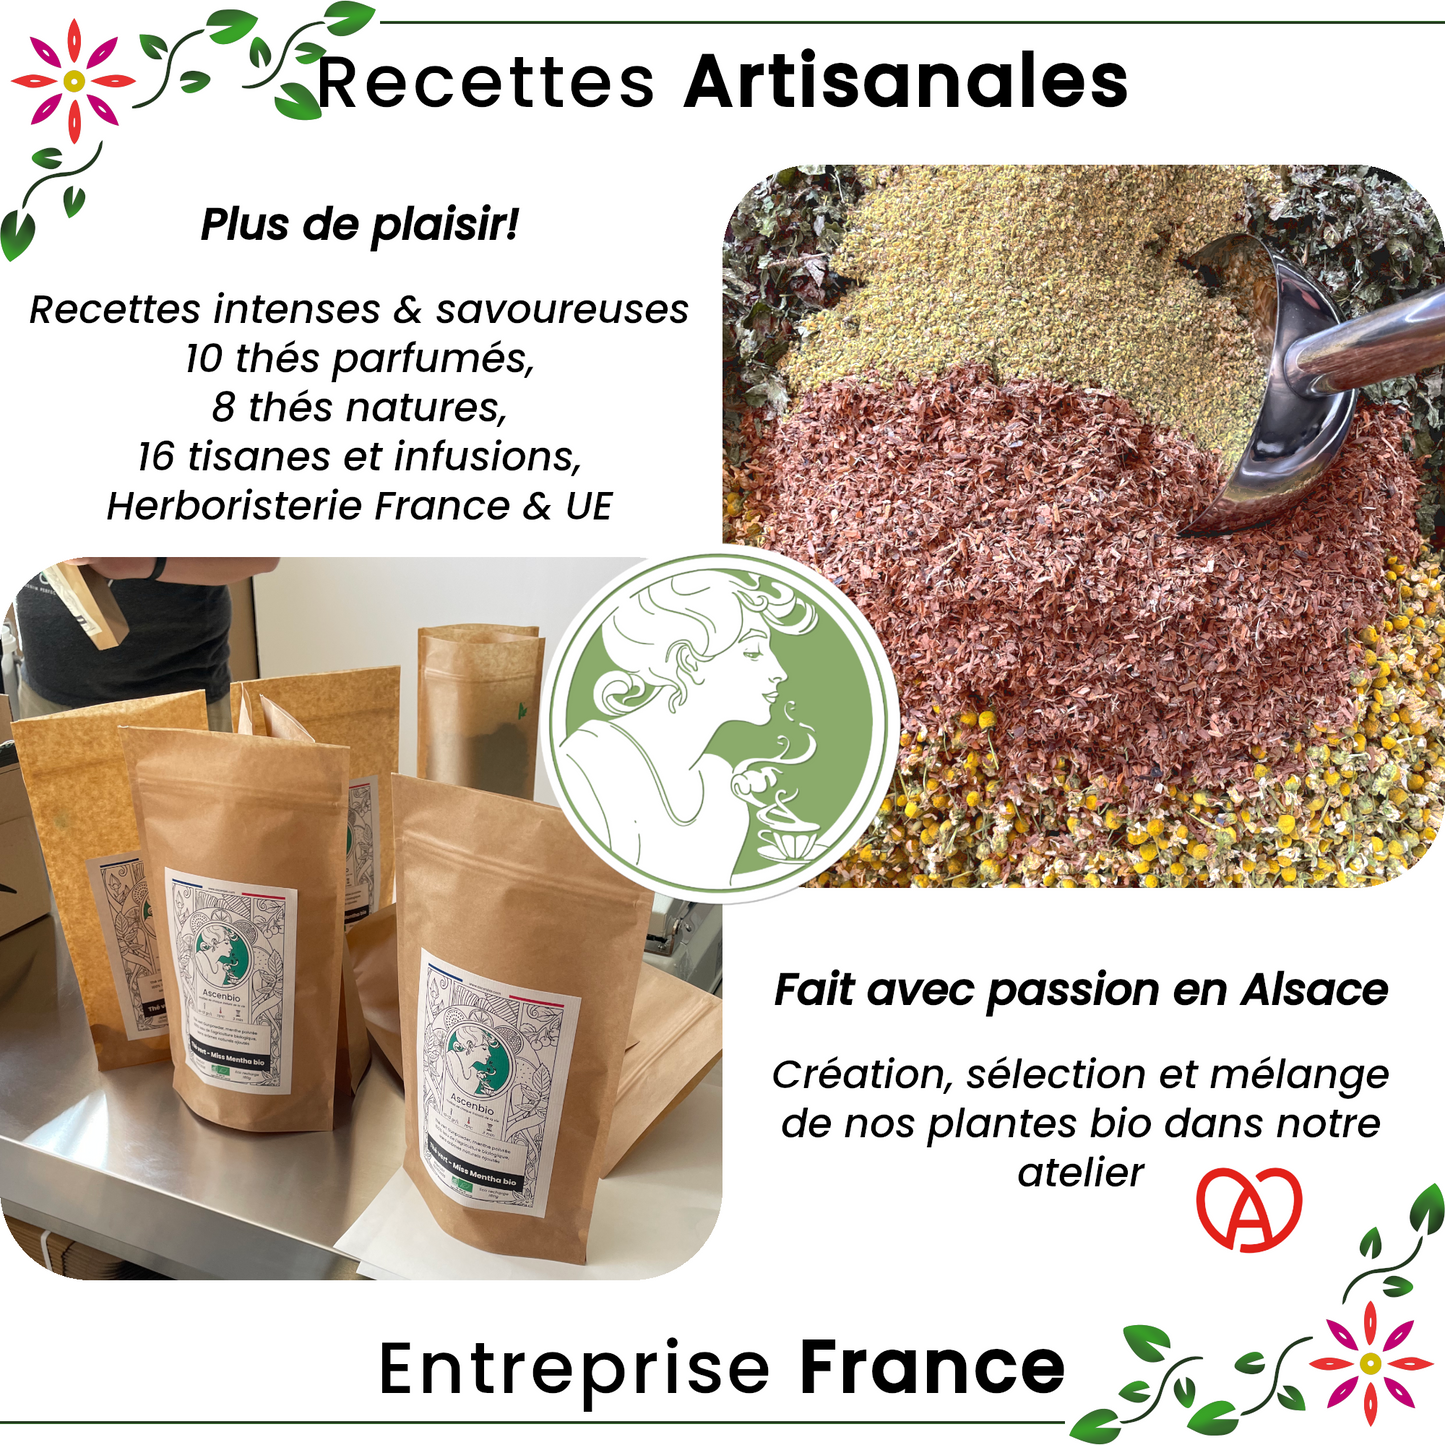 Epice - Herbes de Provence bio